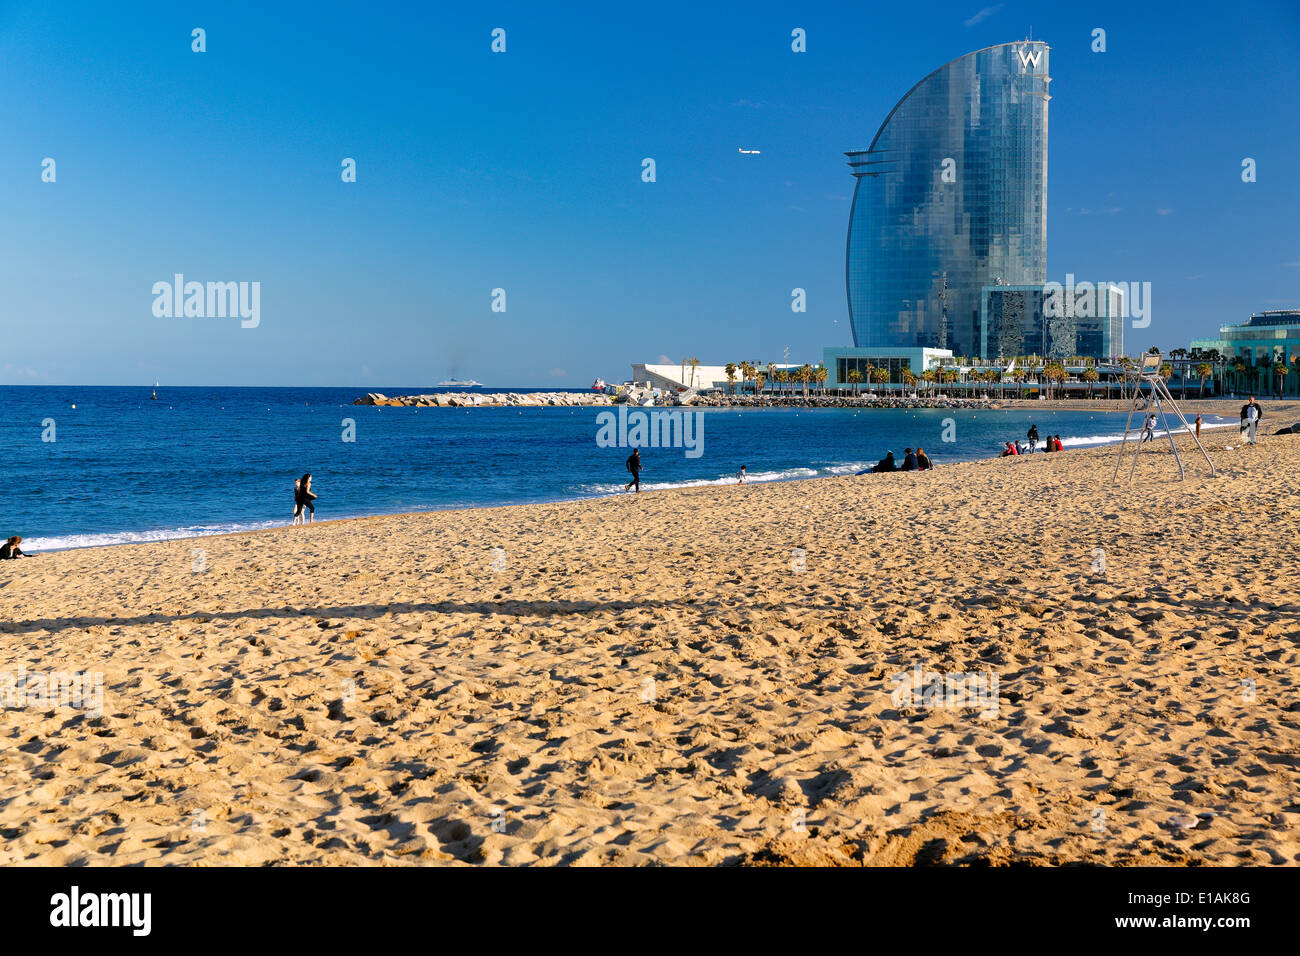 View of the Barceloneta Beach with the W Hotel, Barcelona, Catalonia, Spain Stock Photo